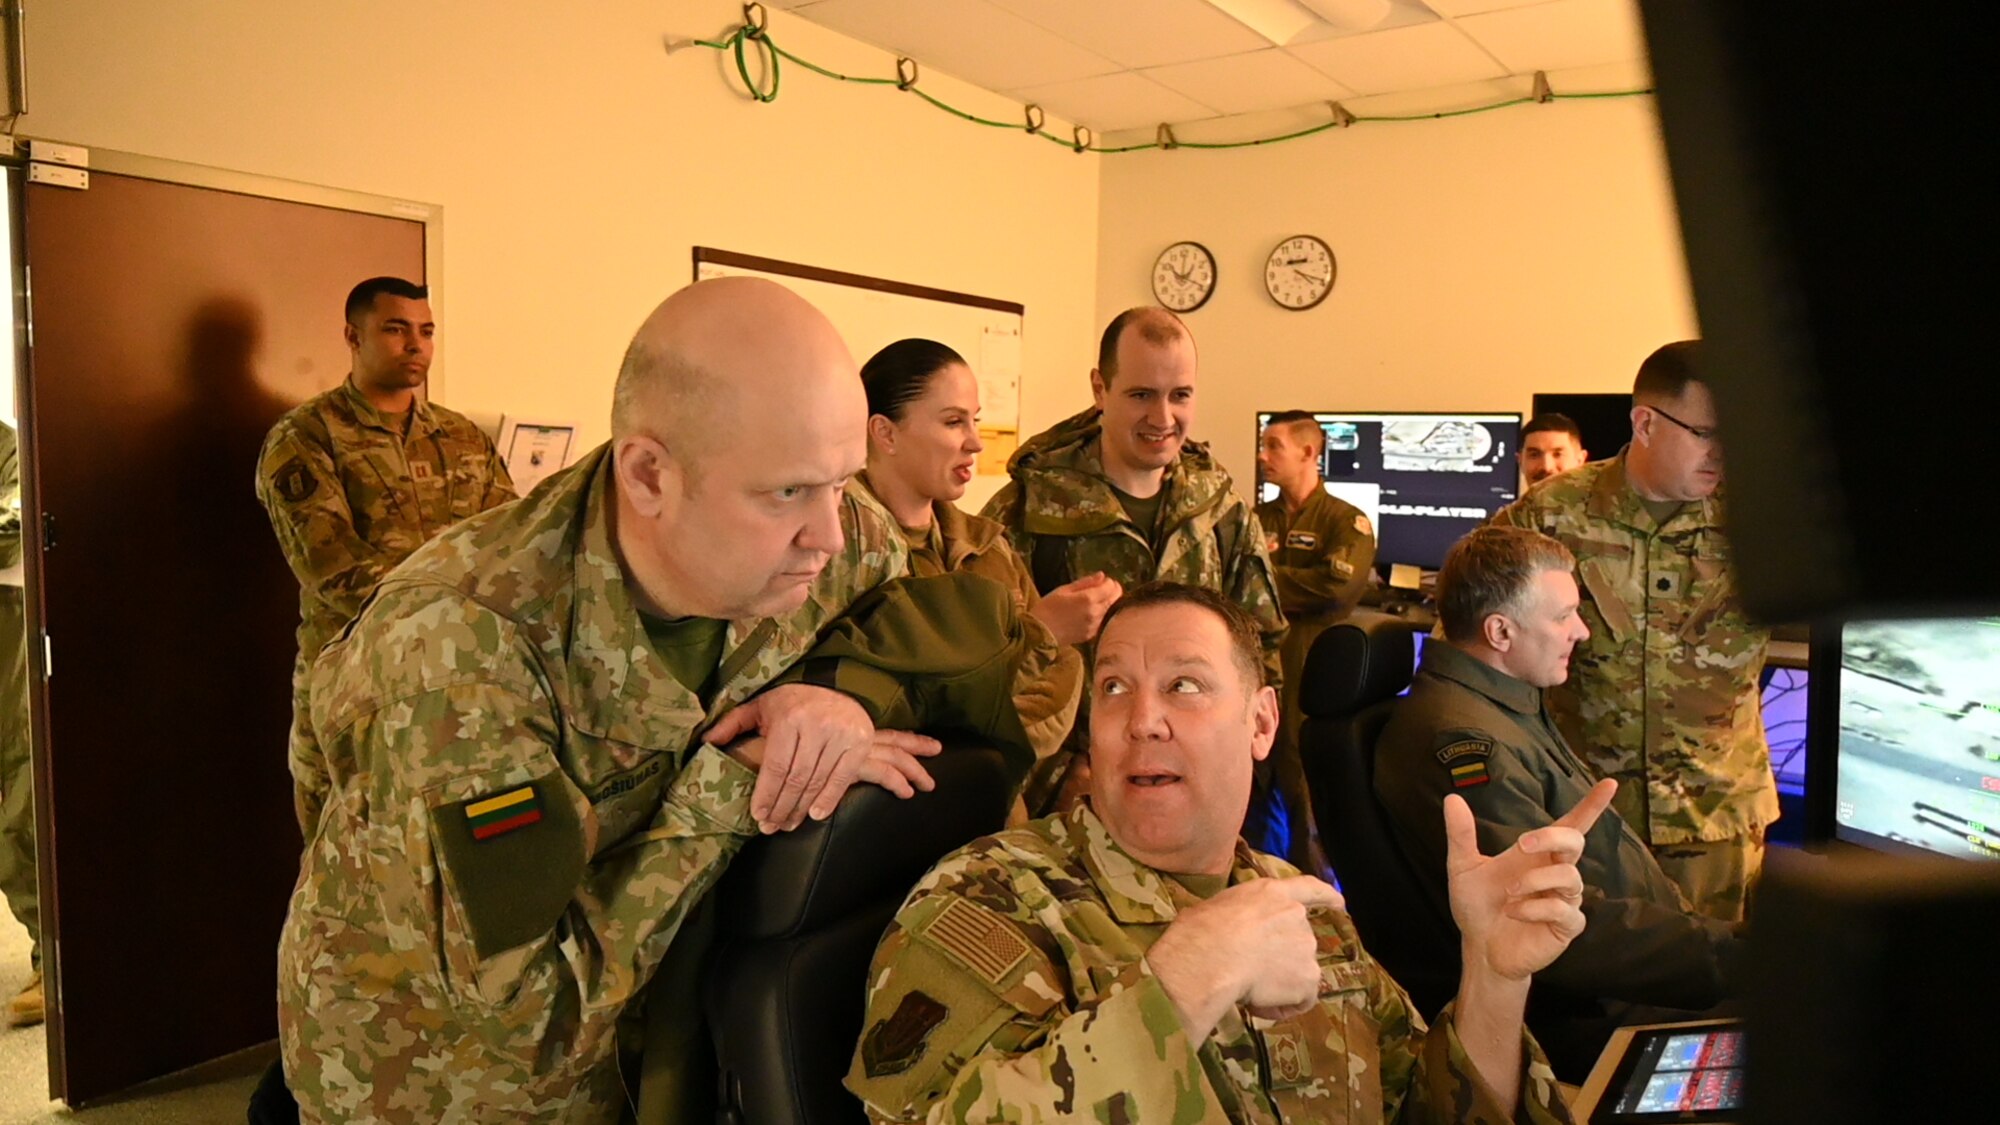 Military personnel surround a flight simulator.